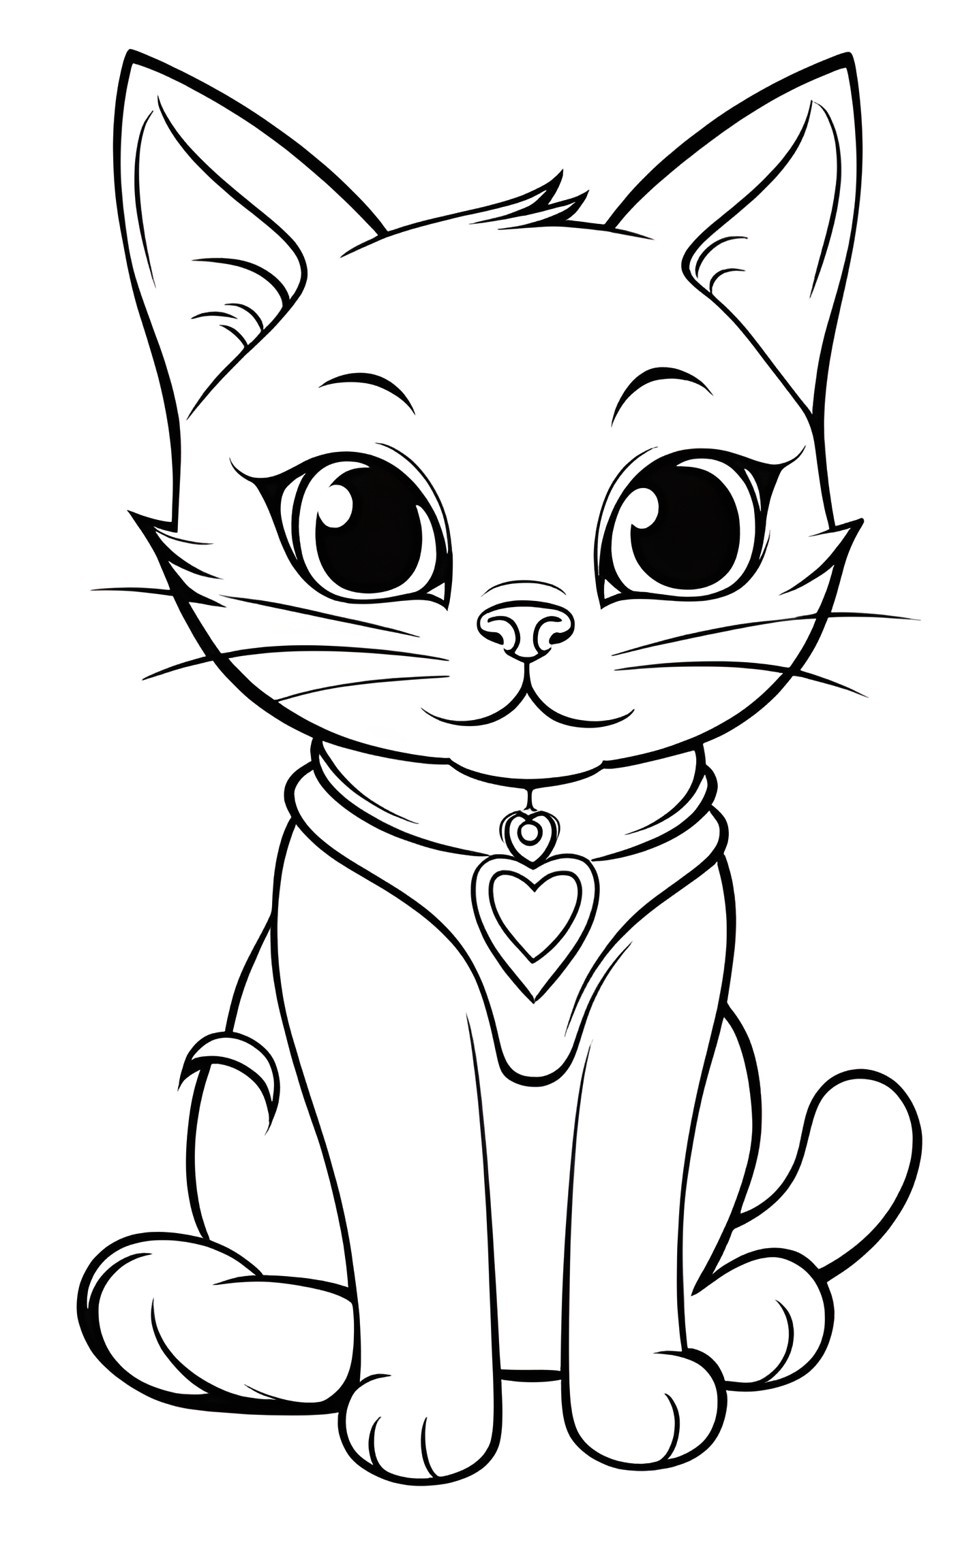 simple cat coloring pages for kids #4 – EĞİTİM KÜLTÜR